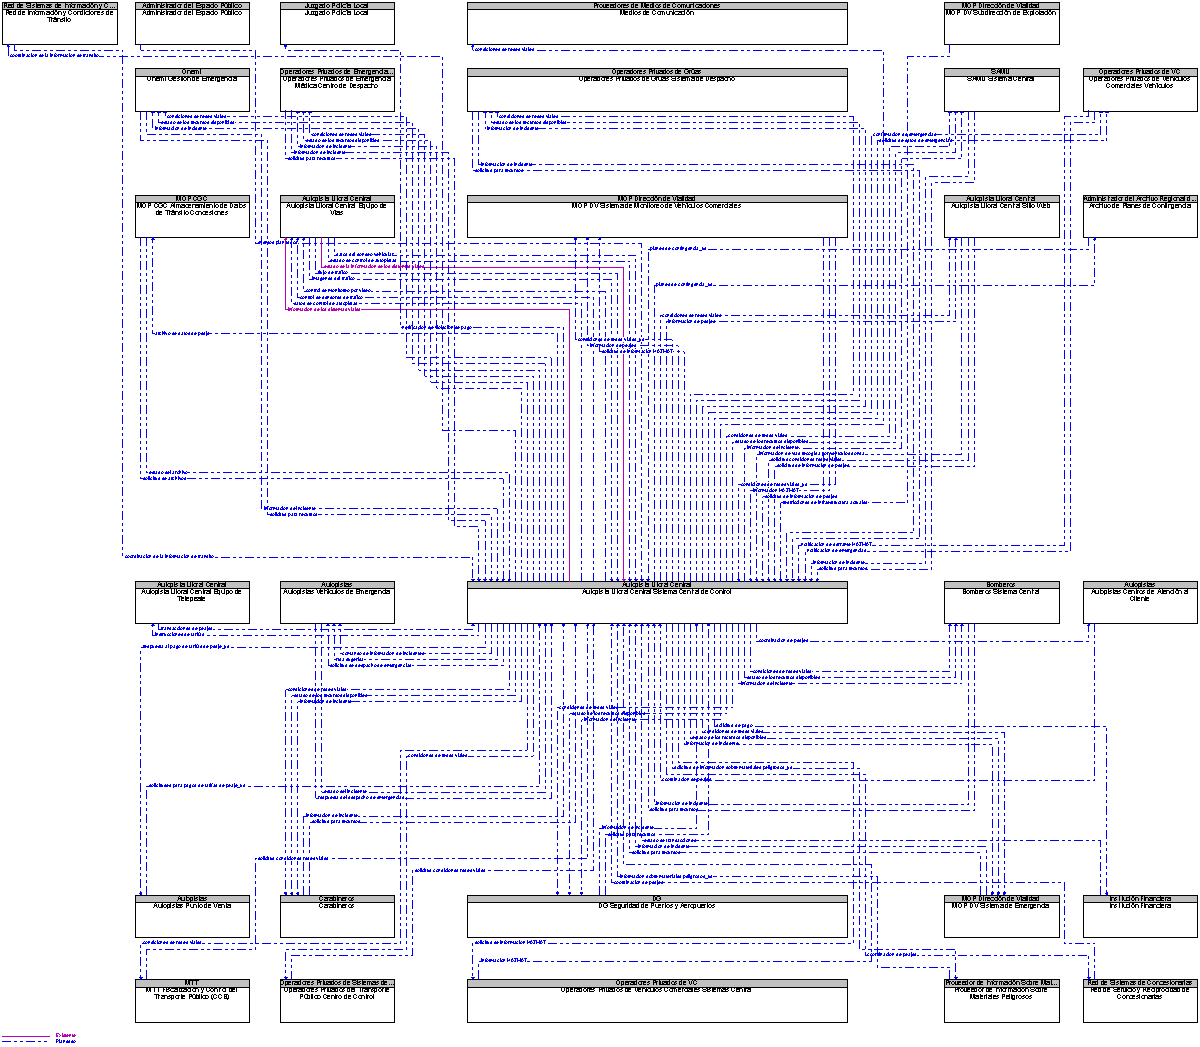 Diagrama Del Contexto por Autopista Litoral Central Sistema Central de Control